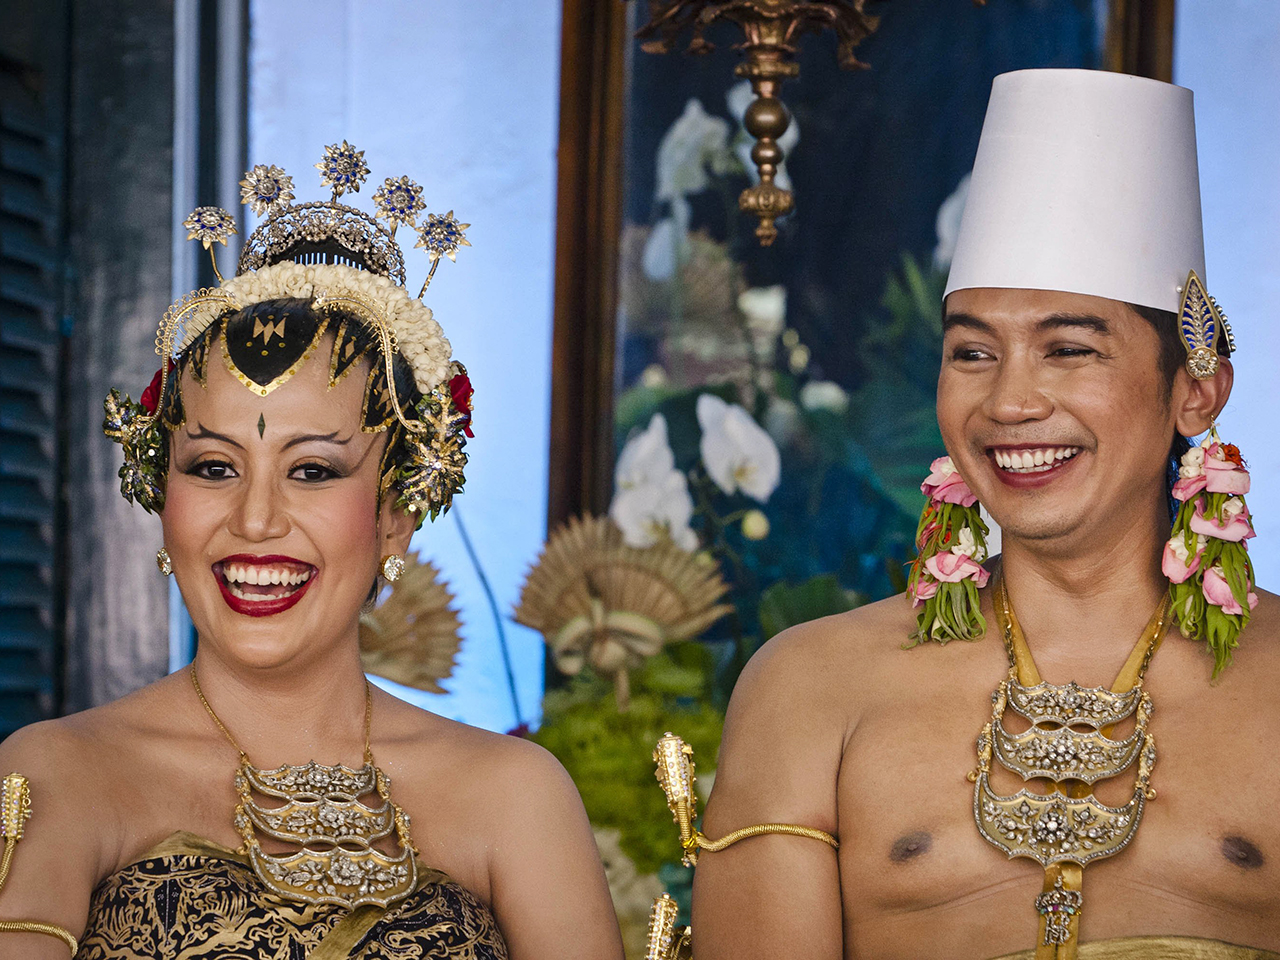 Princess bride! Crowds celebrate colorful royal Indonesian wedding